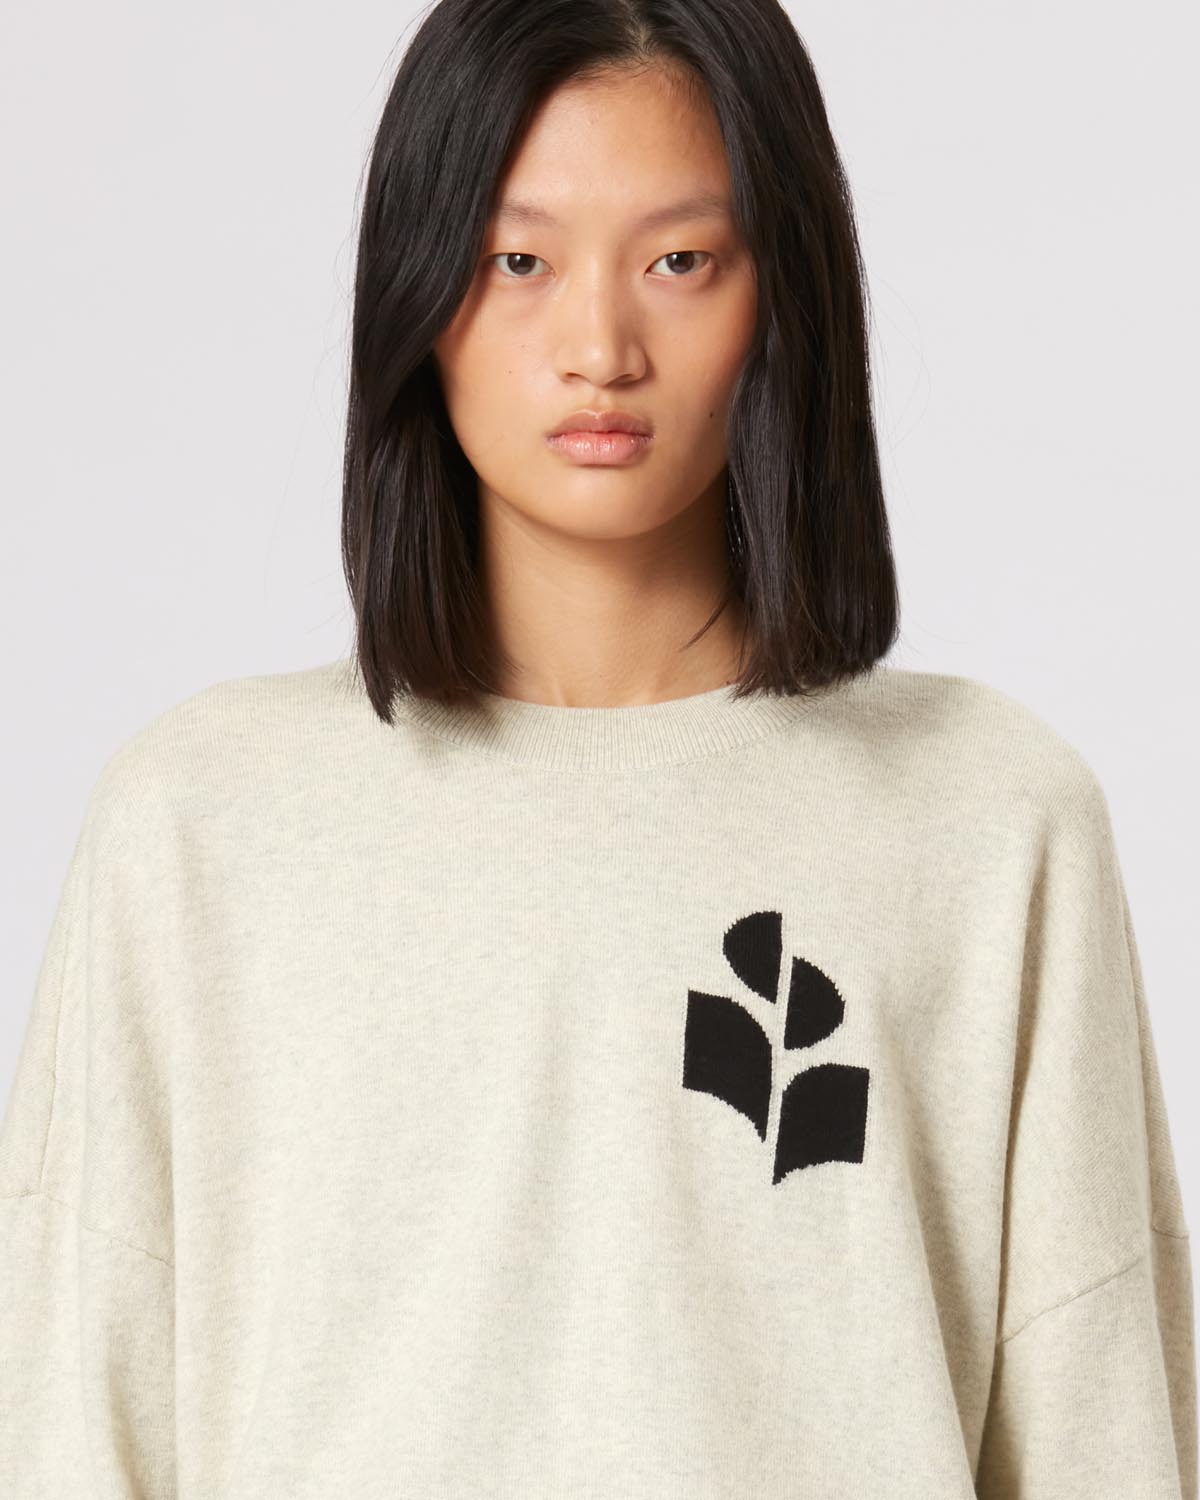 Marisans sweater Woman Light gray 2